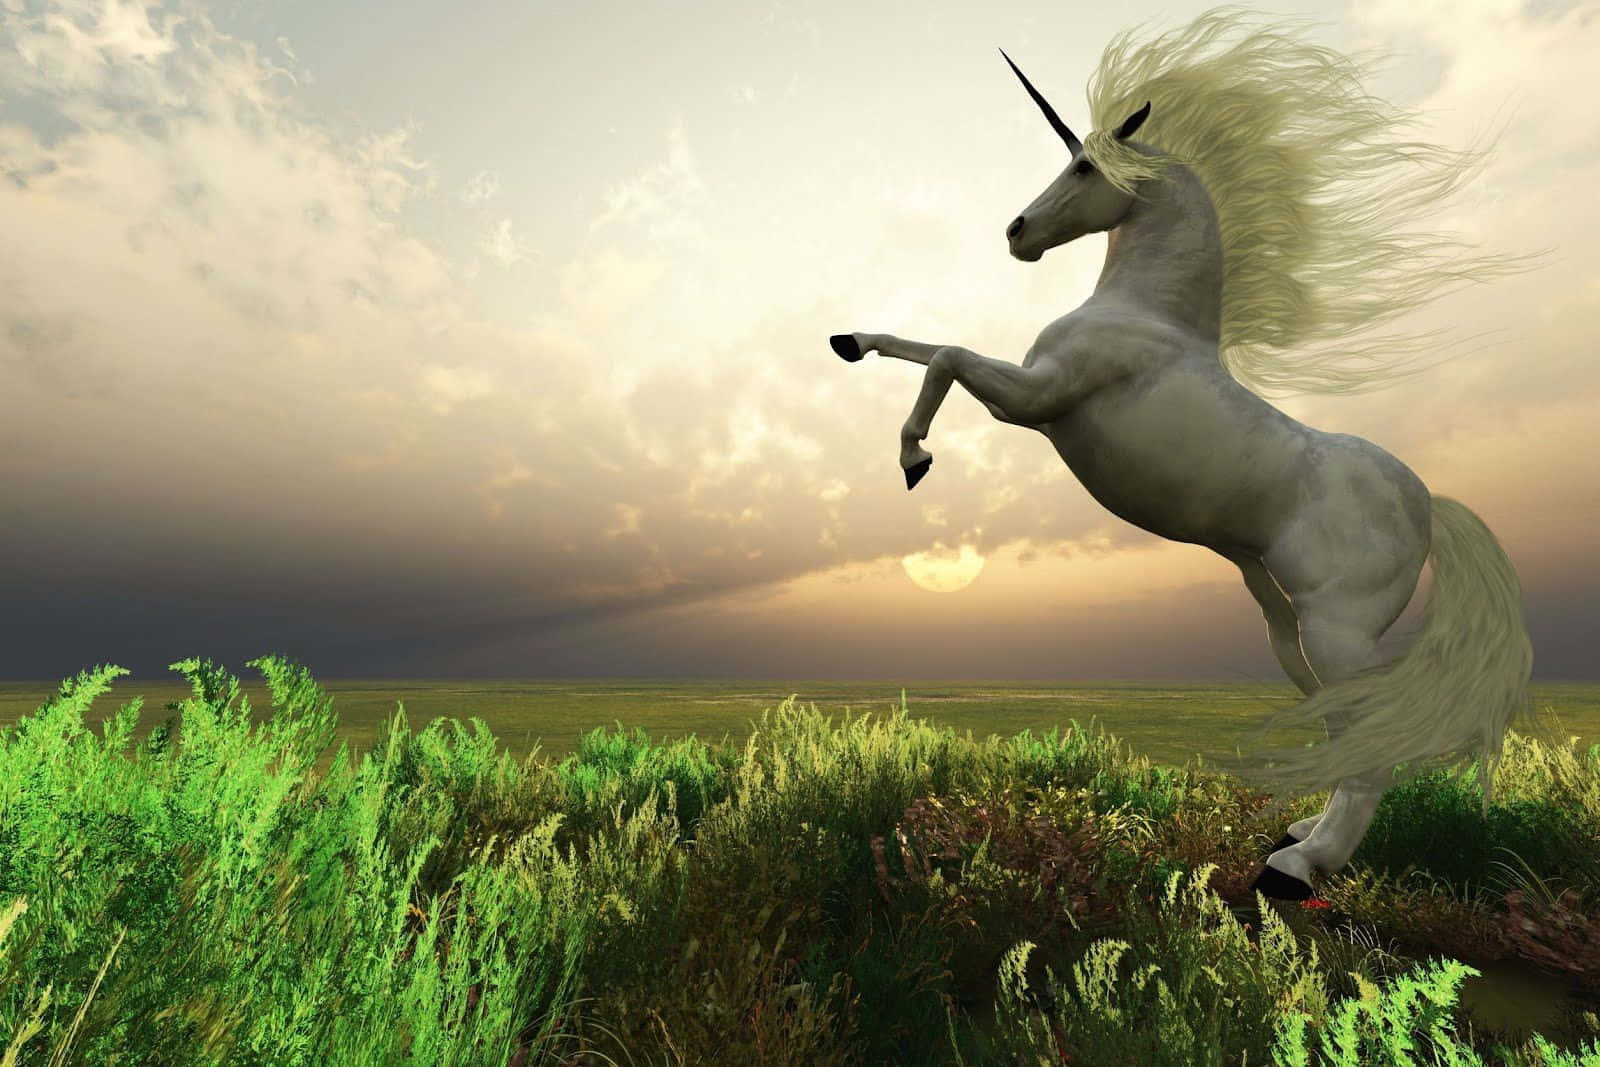 Download A Magical Real-Life Unicorn Wallpaper | Wallpapers.com